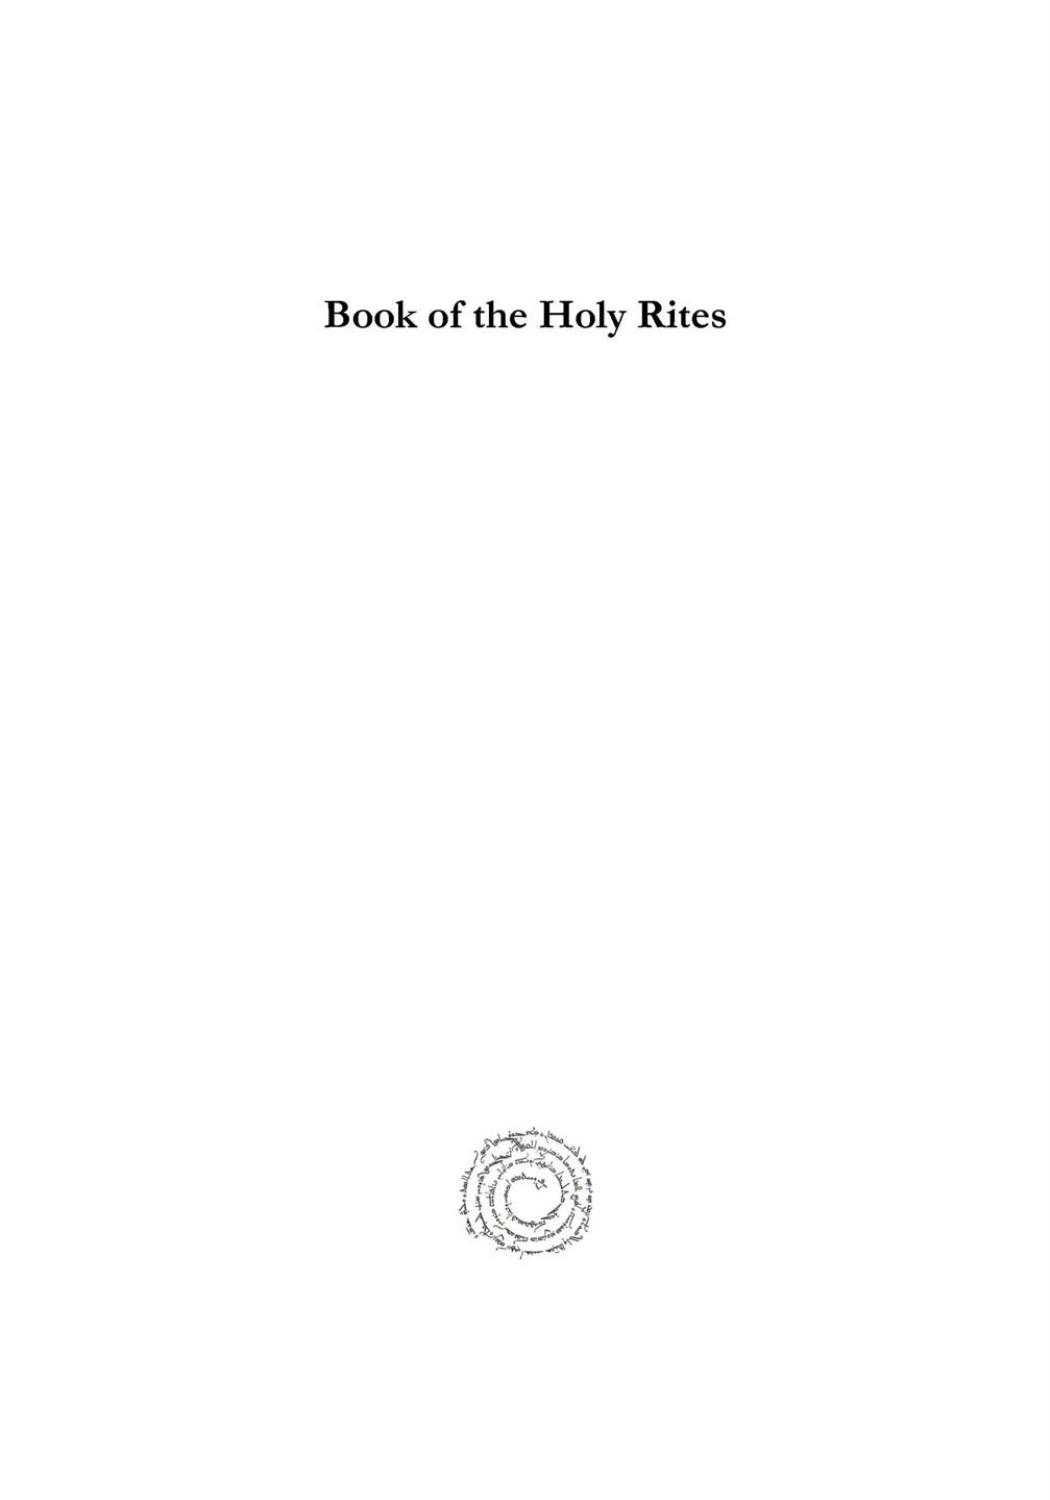 Book of the Holy Rites by Gorgias Press LLC